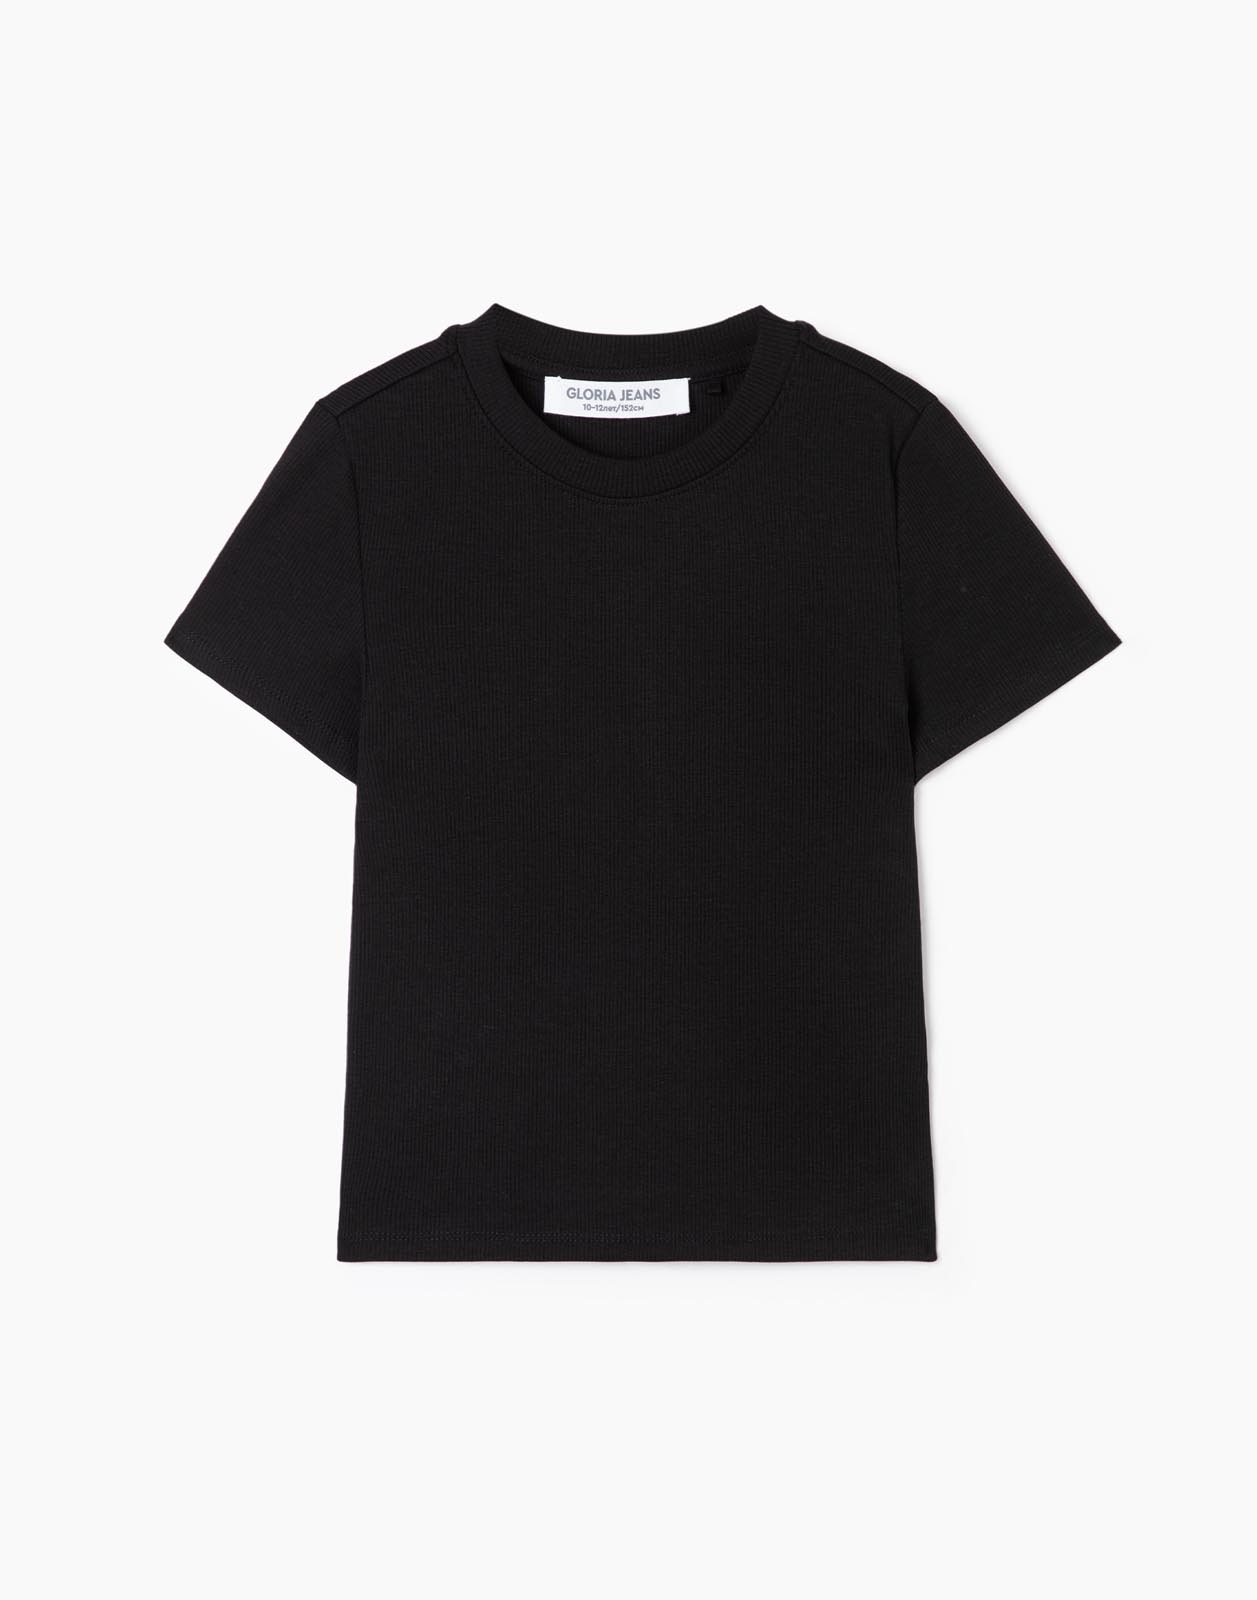 Чёрная базовая футболка Fitted для девочки